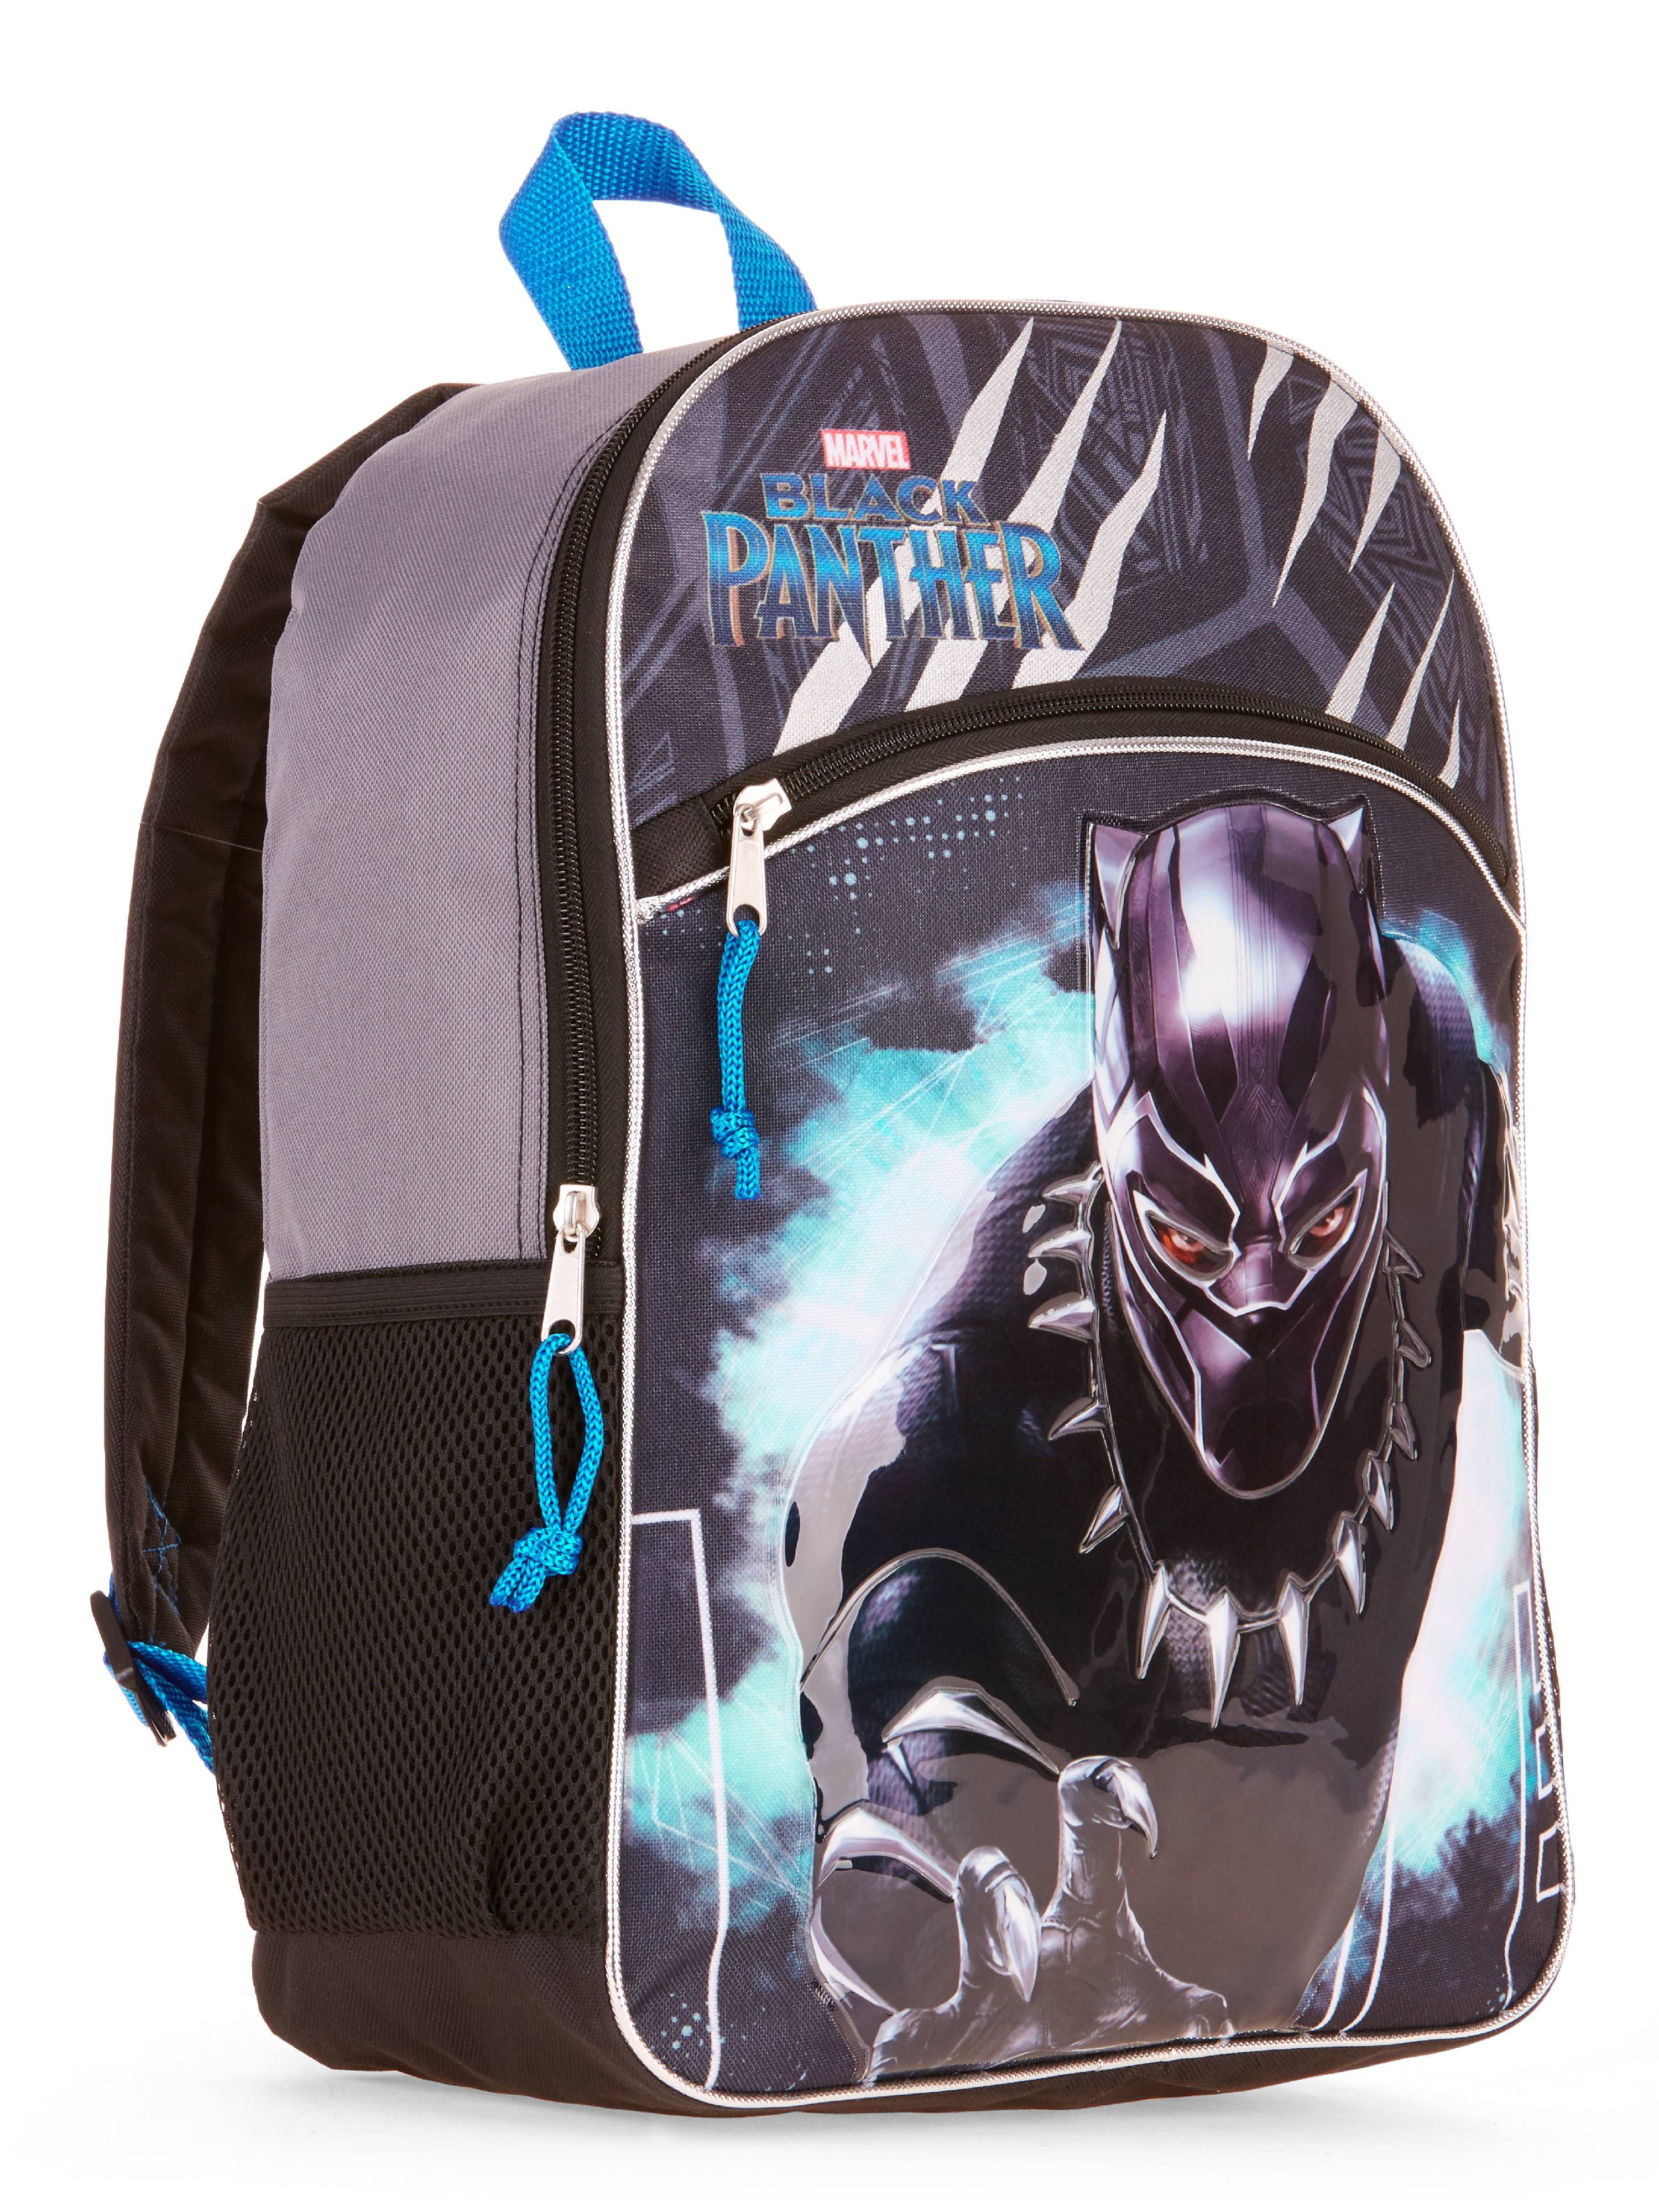 Black Panther Personalise School Bag Backpack Rucksack Reflective Kids Bday Gift